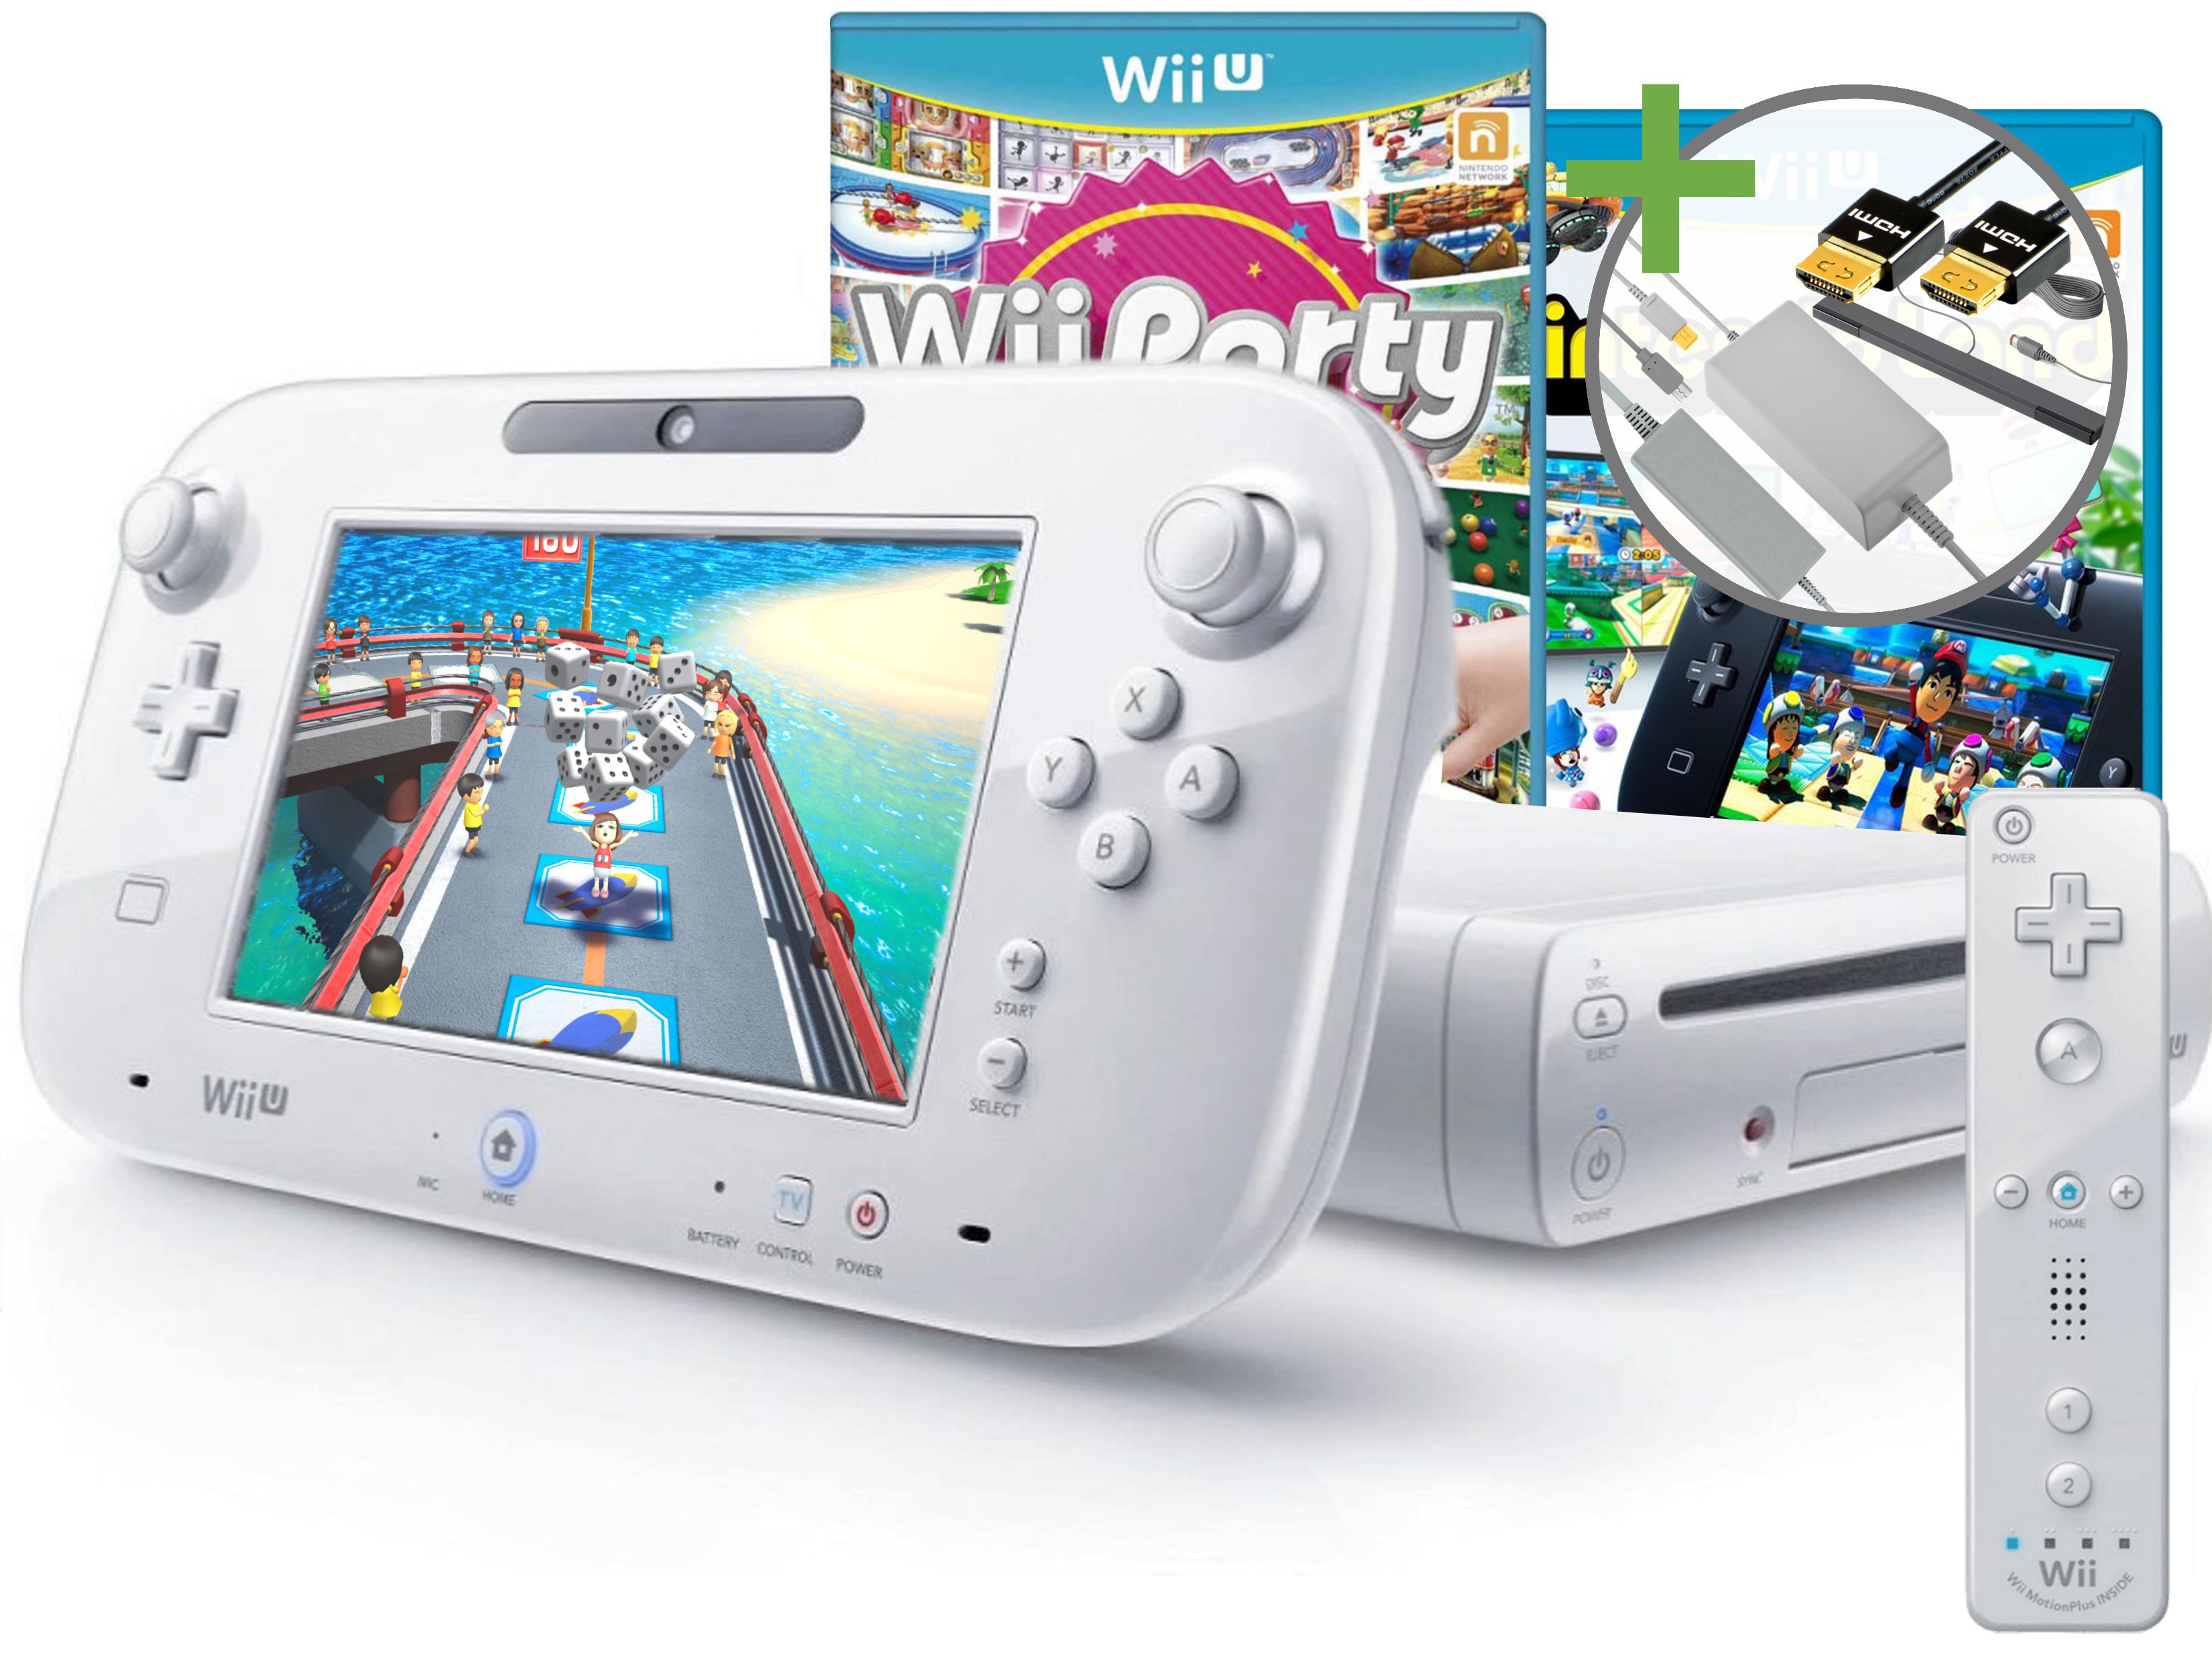 Nintendo Wii U Starter Pack - Wii Party U Edition [Complete] - Wii U Hardware - 2